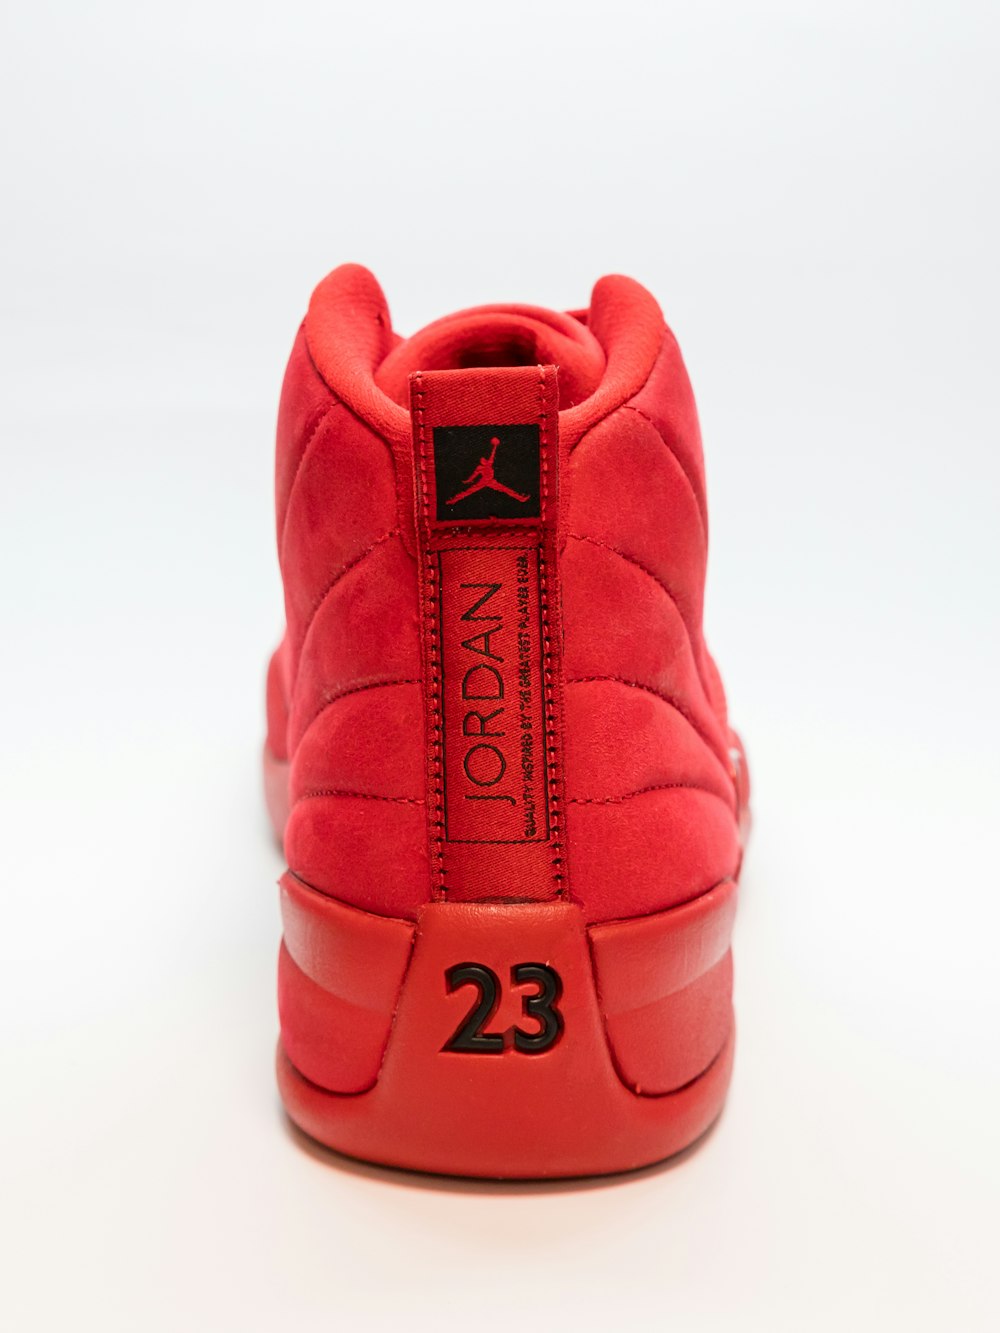 unpaired red Air Jordan basketball shoe photo – Free Red Image on Unsplash